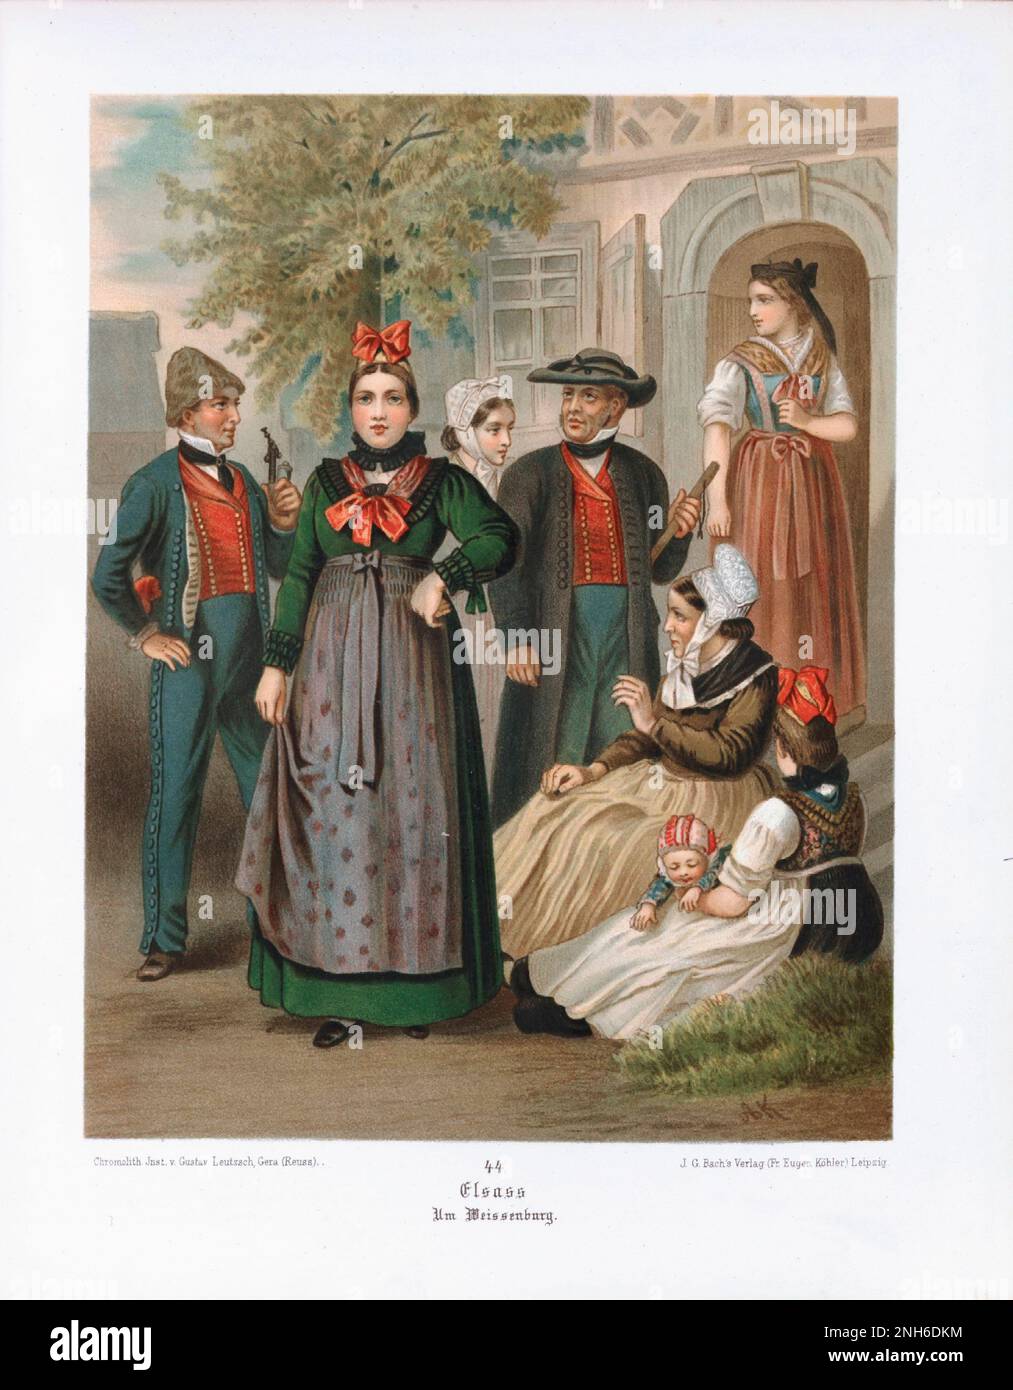 German folk costume. Alsace (German: Elsass). 19th-century lithography ...